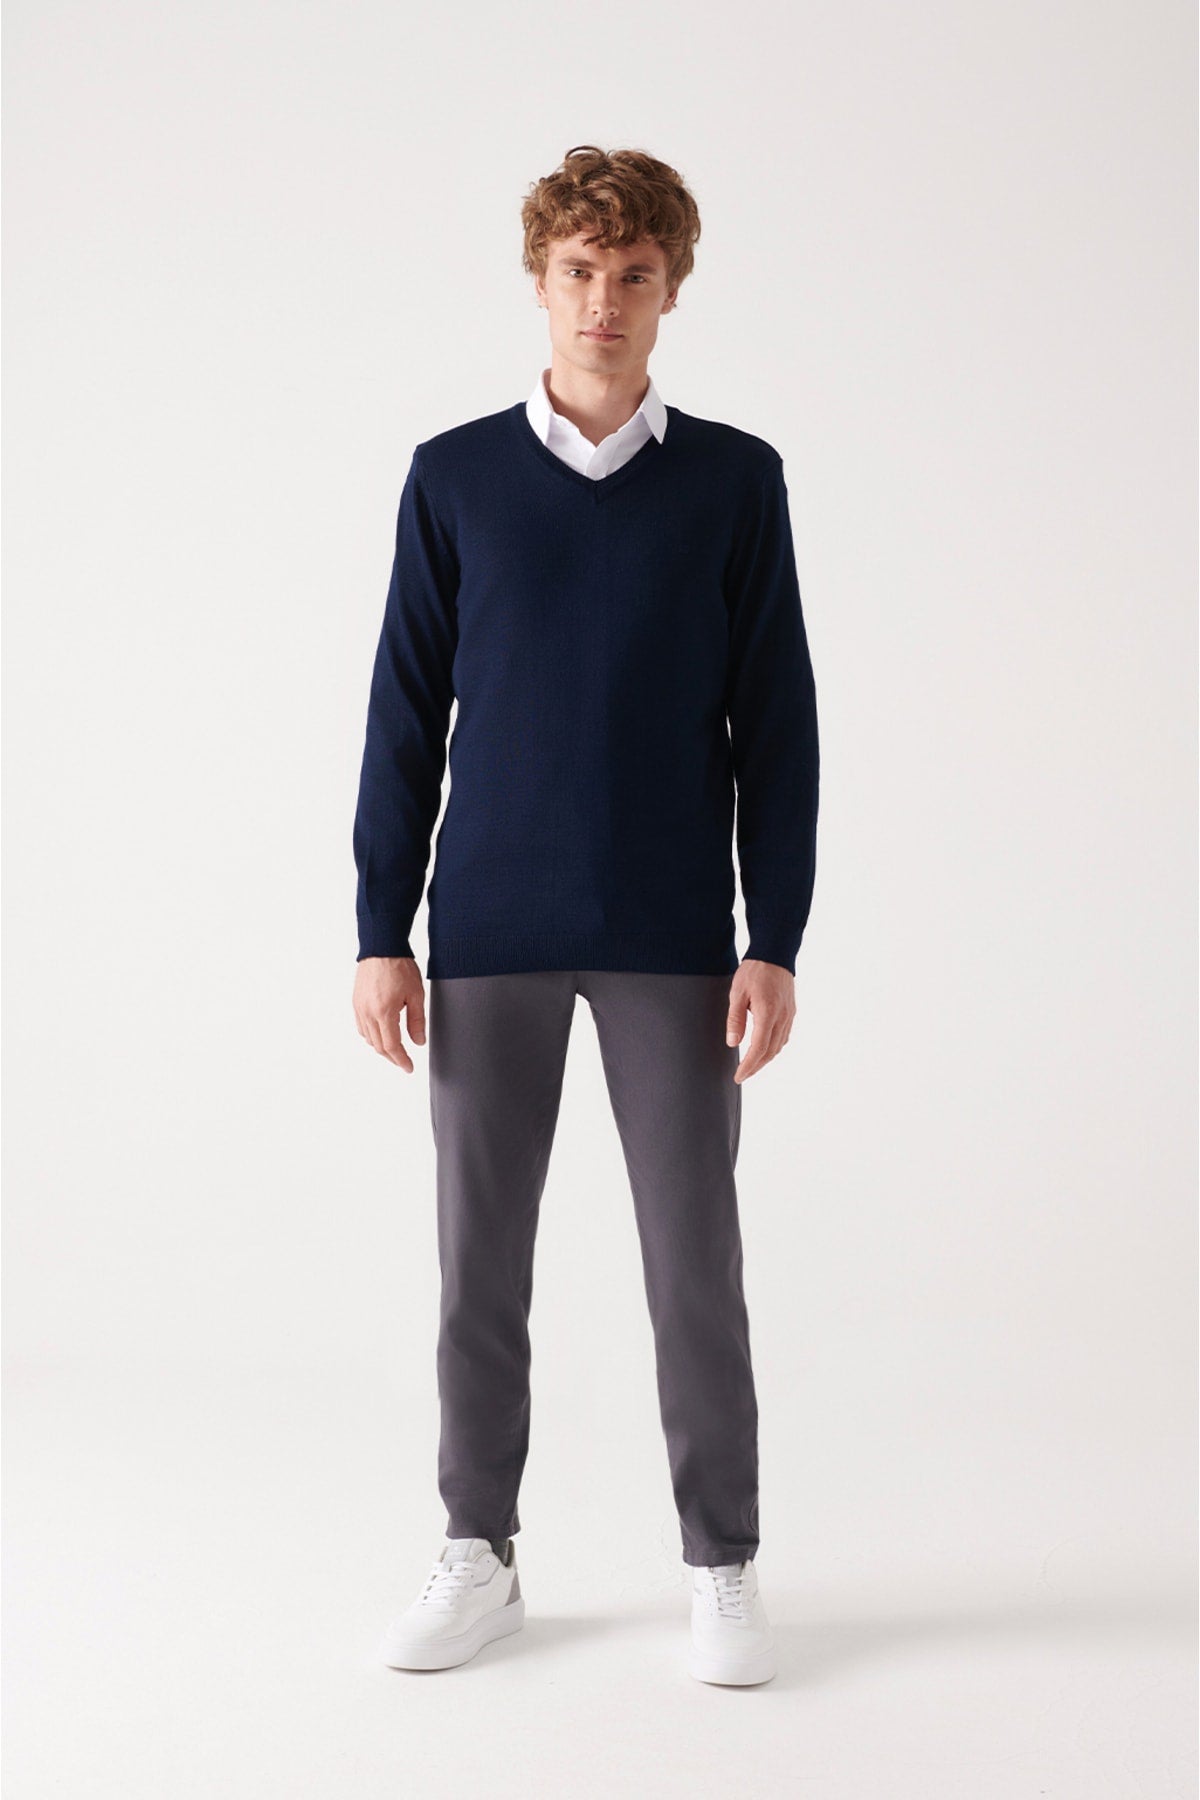 Men's navy blue V -neck wool mixed basic knitwear sweater E005016